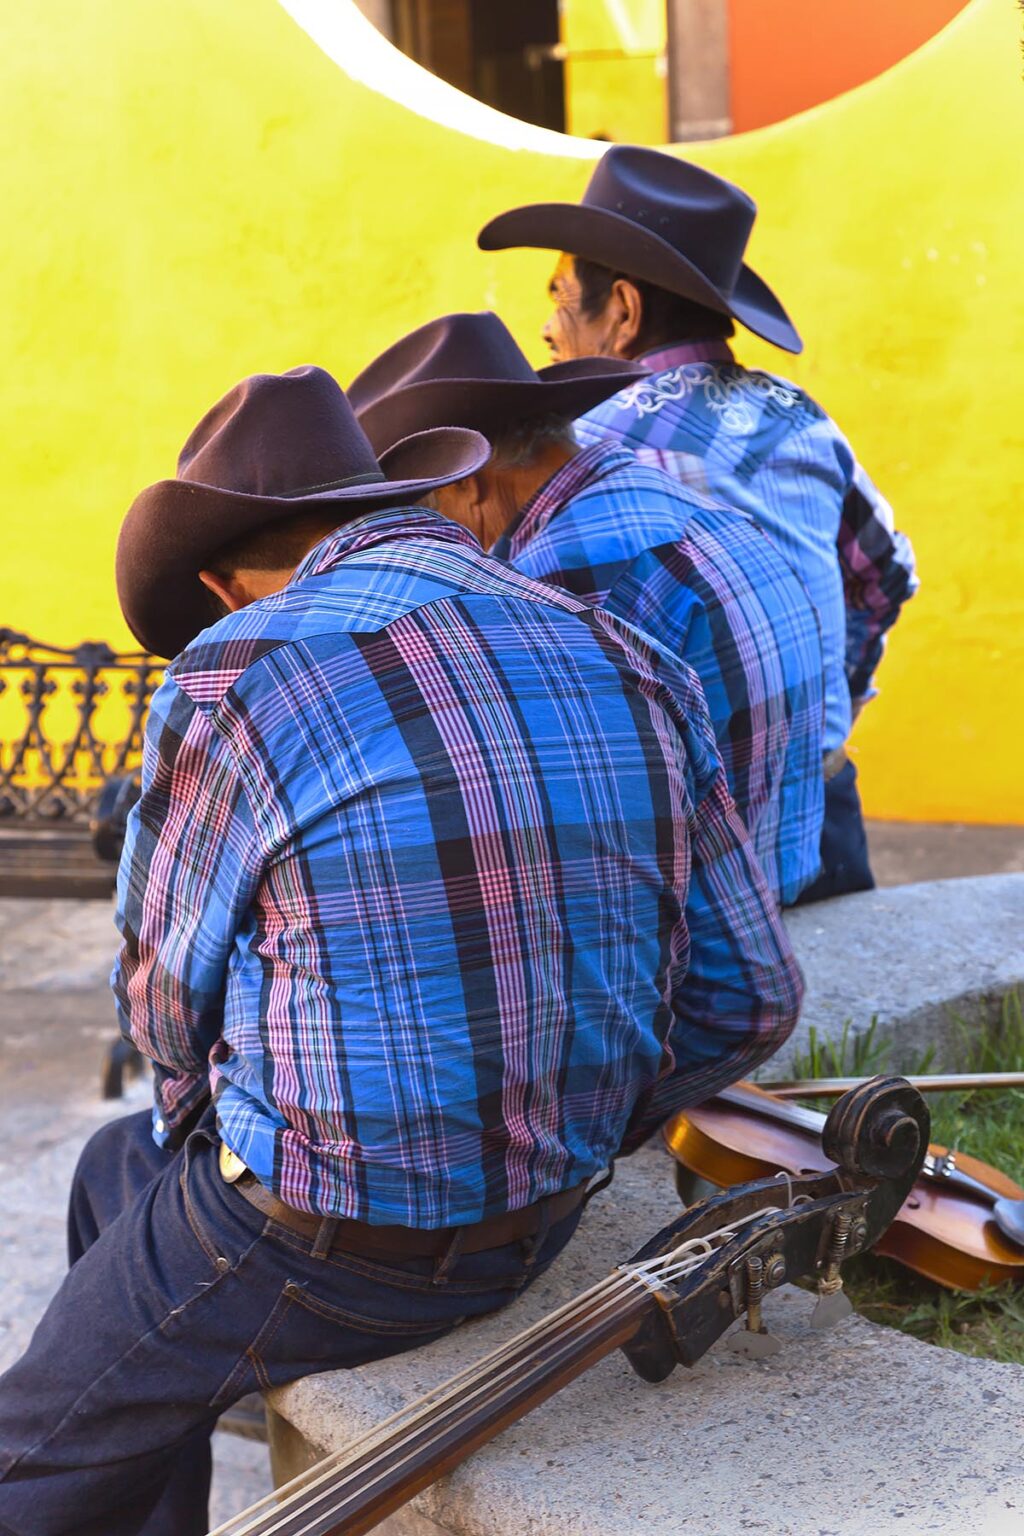 COWBOY musicians play traditional songs for a few pesos - SAN MIGUEL DE ALLENDE, MEXICO